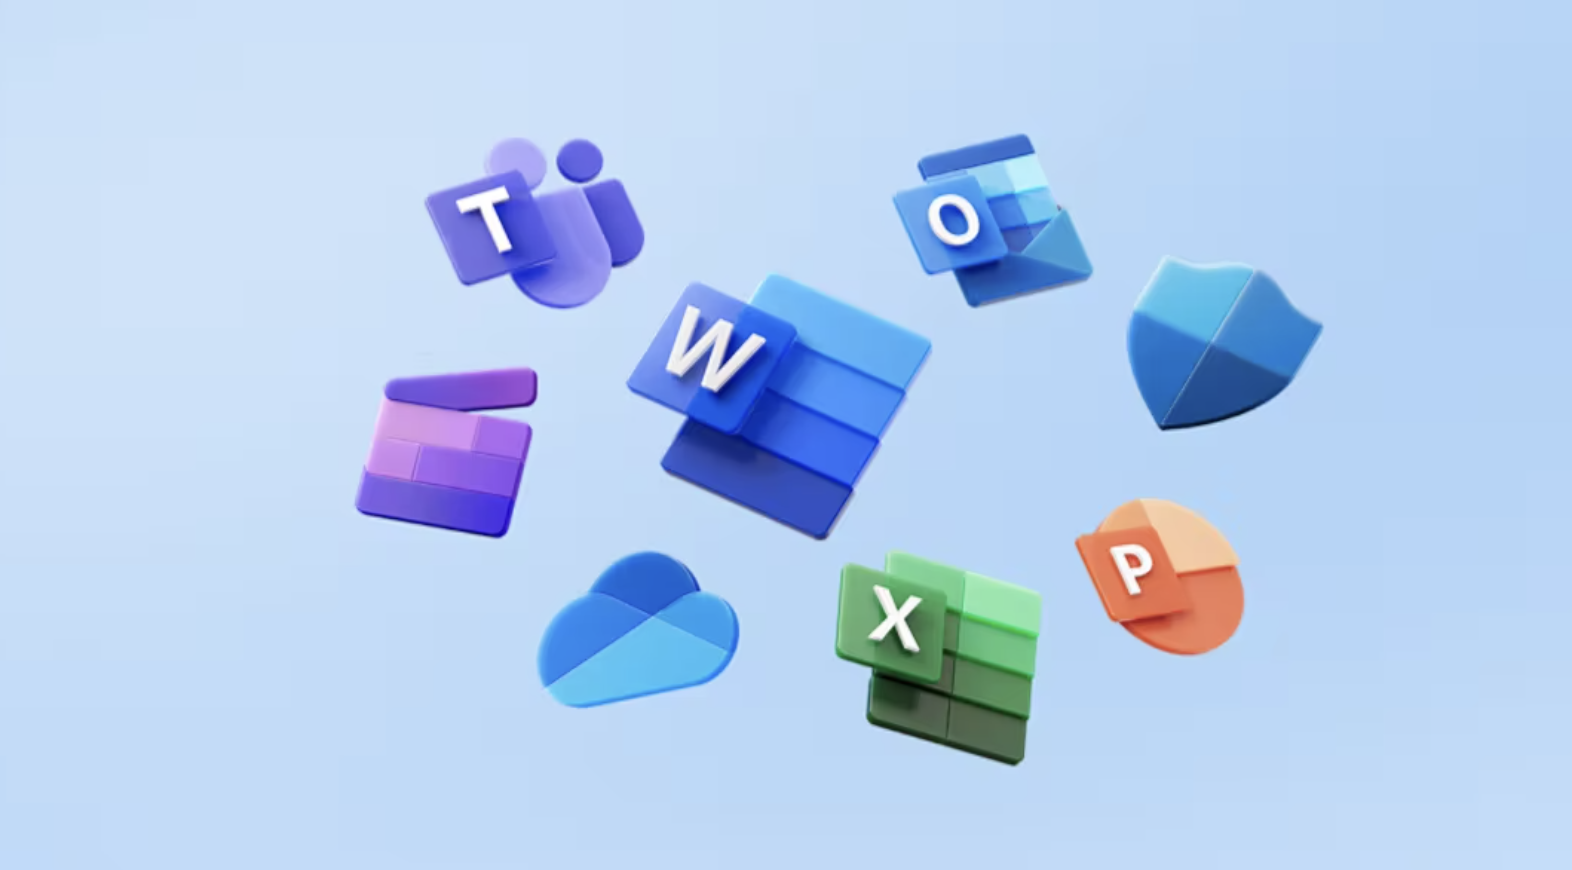 Product logos of Microsoft